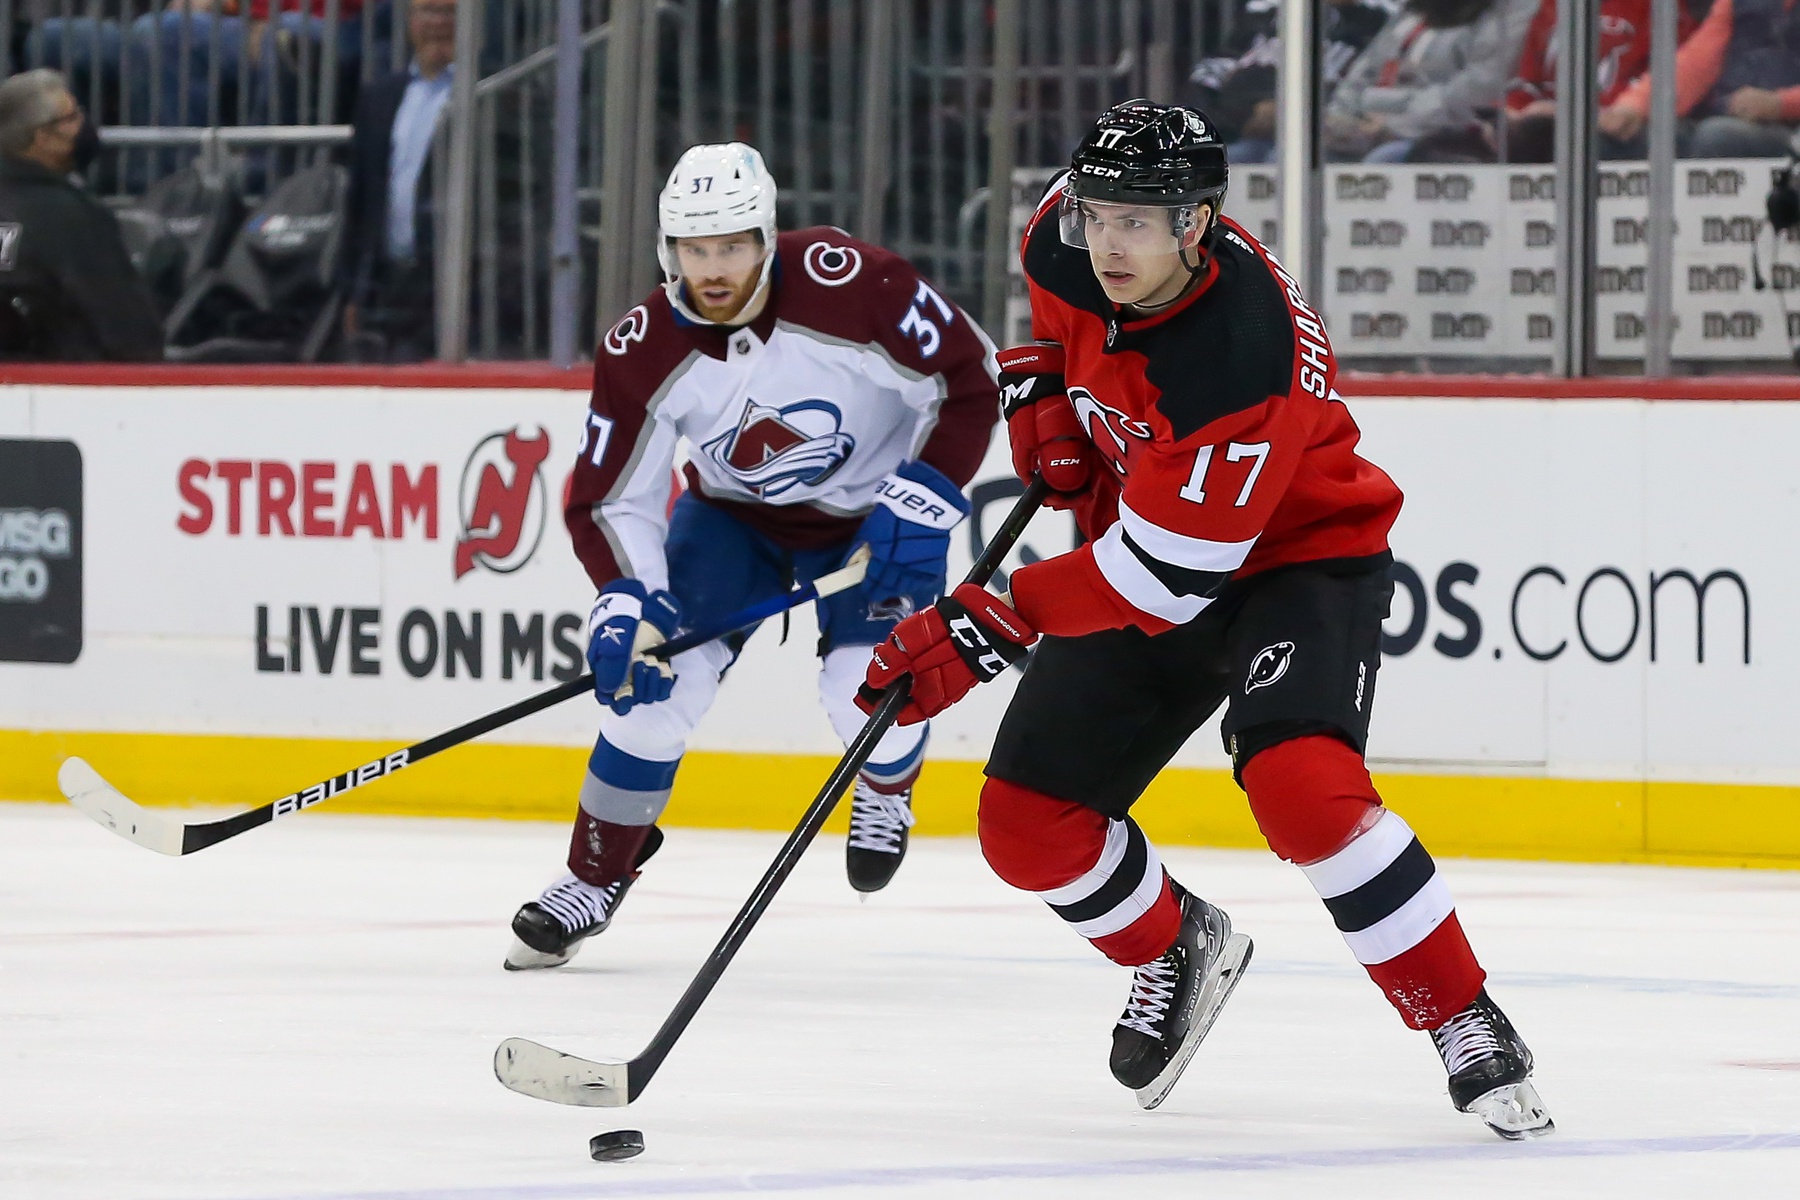 Devils vs. Red Wings odds, prediction: NHL picks, best bets